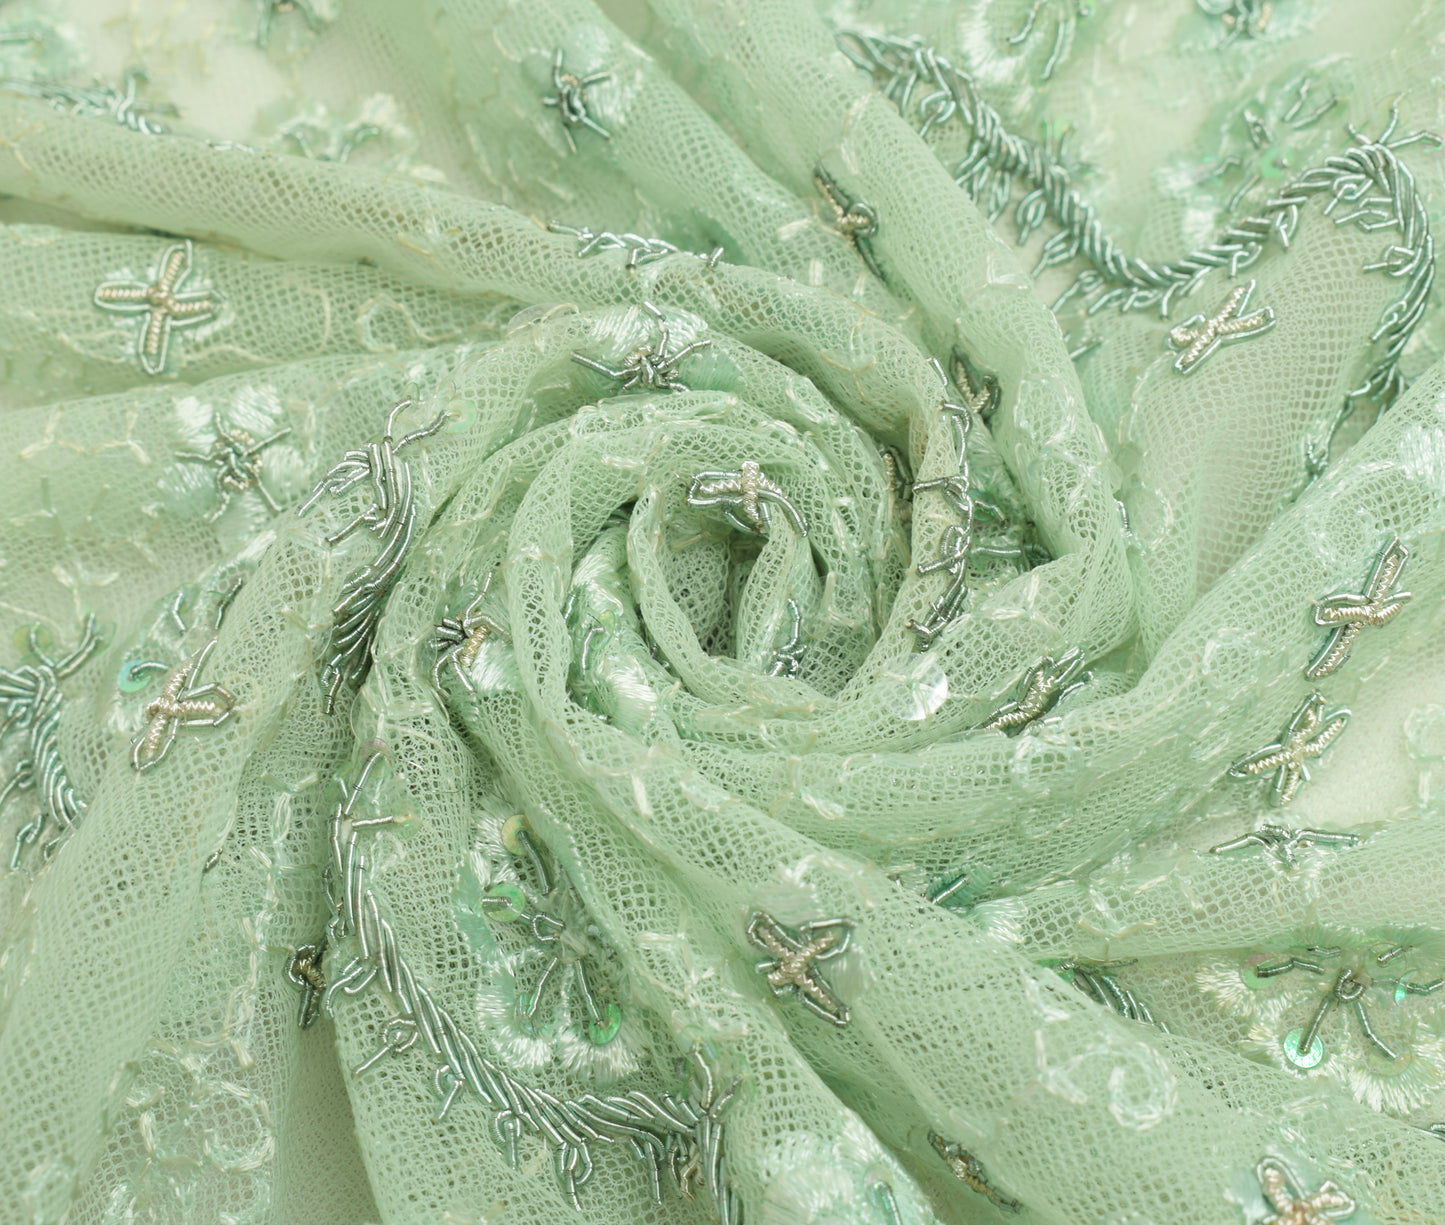 Sushila Vintage Green Net Sari Remnant Scrap Hand Beaded Floral Craft Fabric